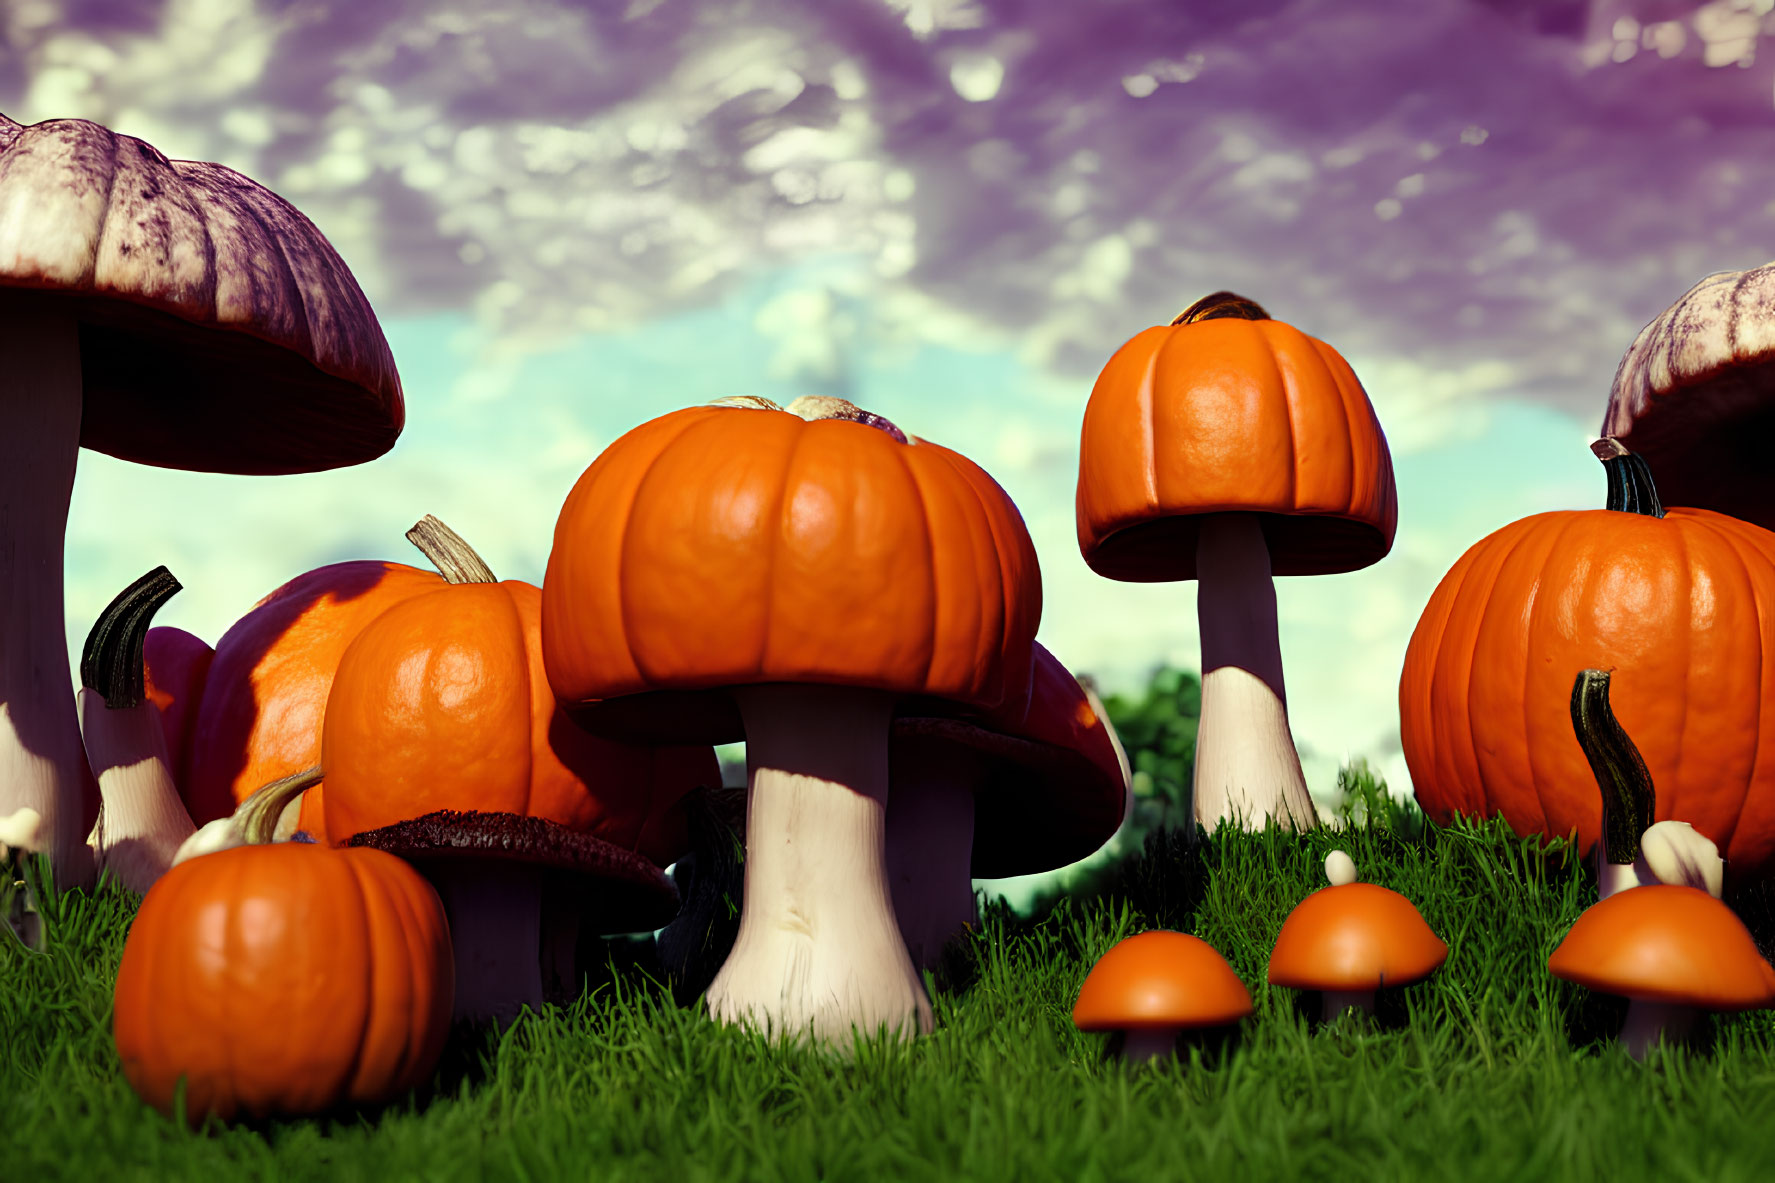 Autumnal pumpkins and mushrooms on grass under blue sky